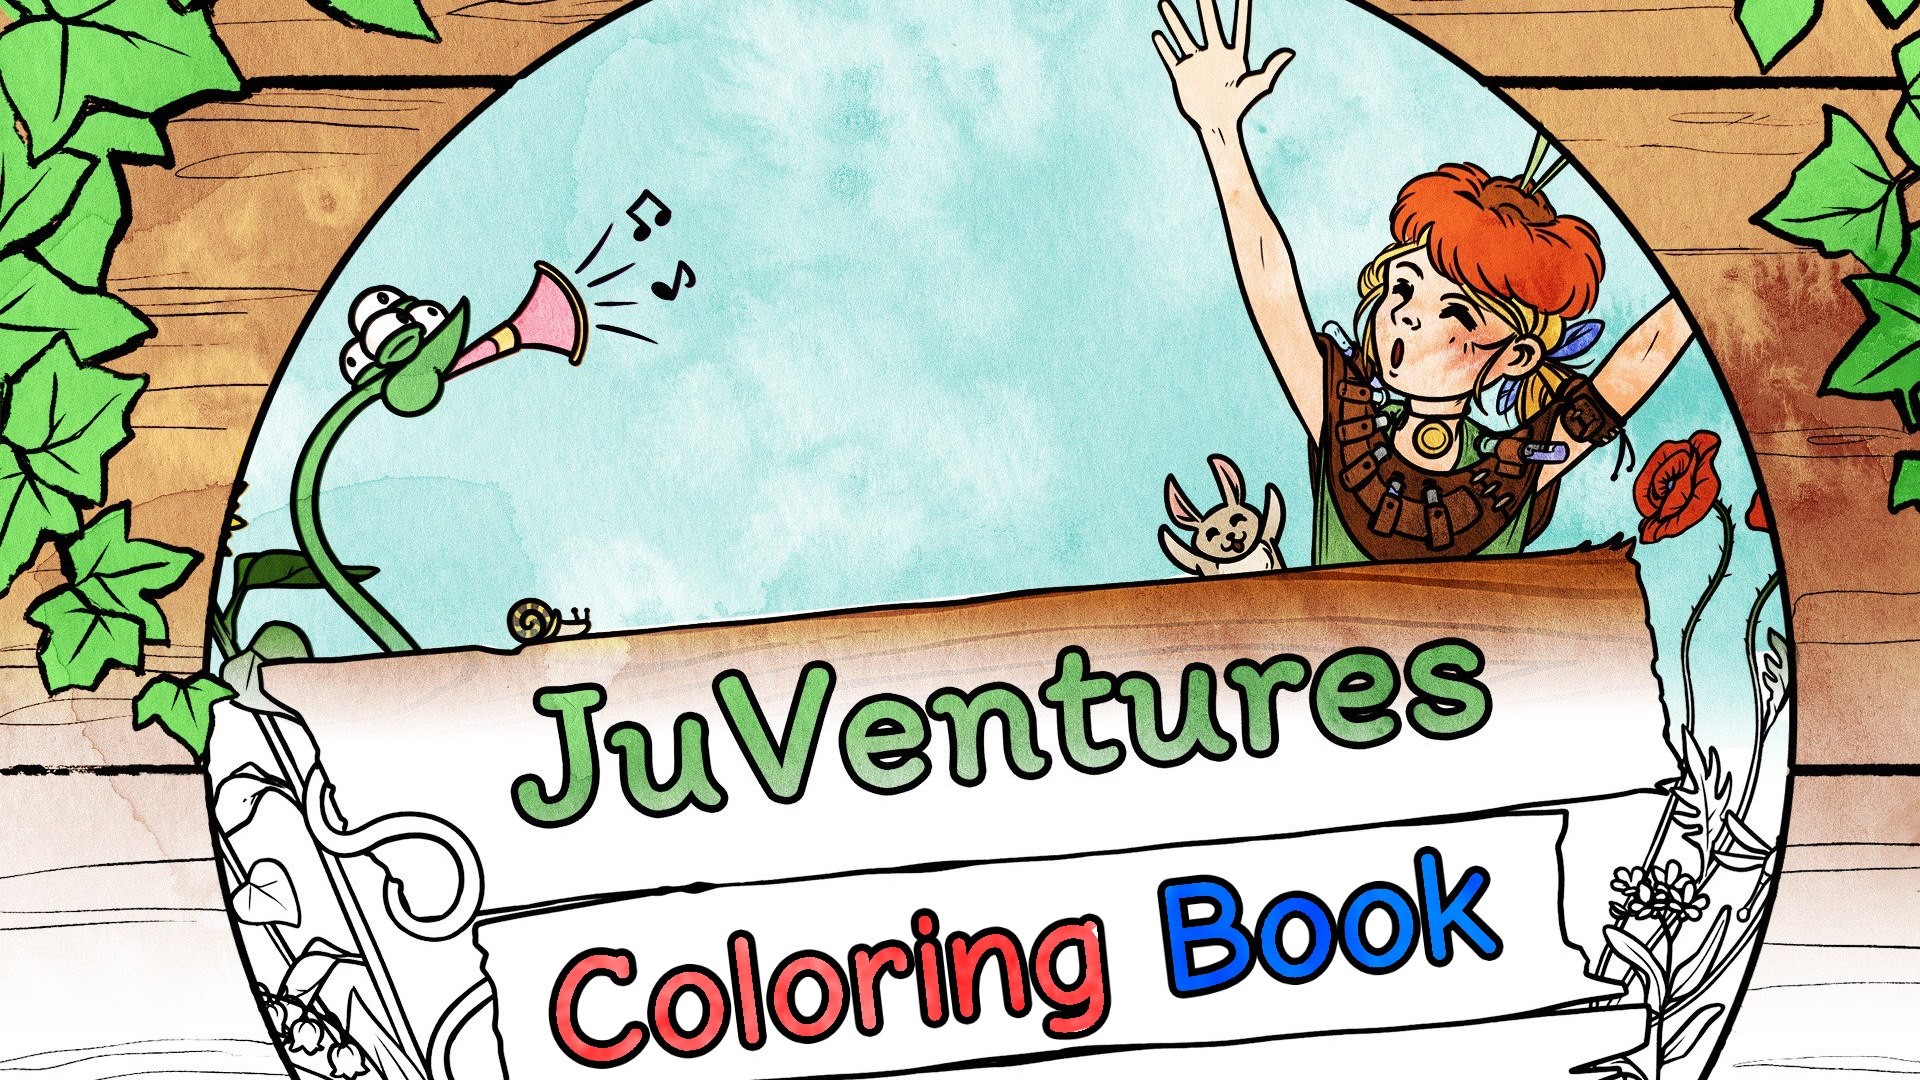 JuVentures - Coloring Book Featured Screenshot #1